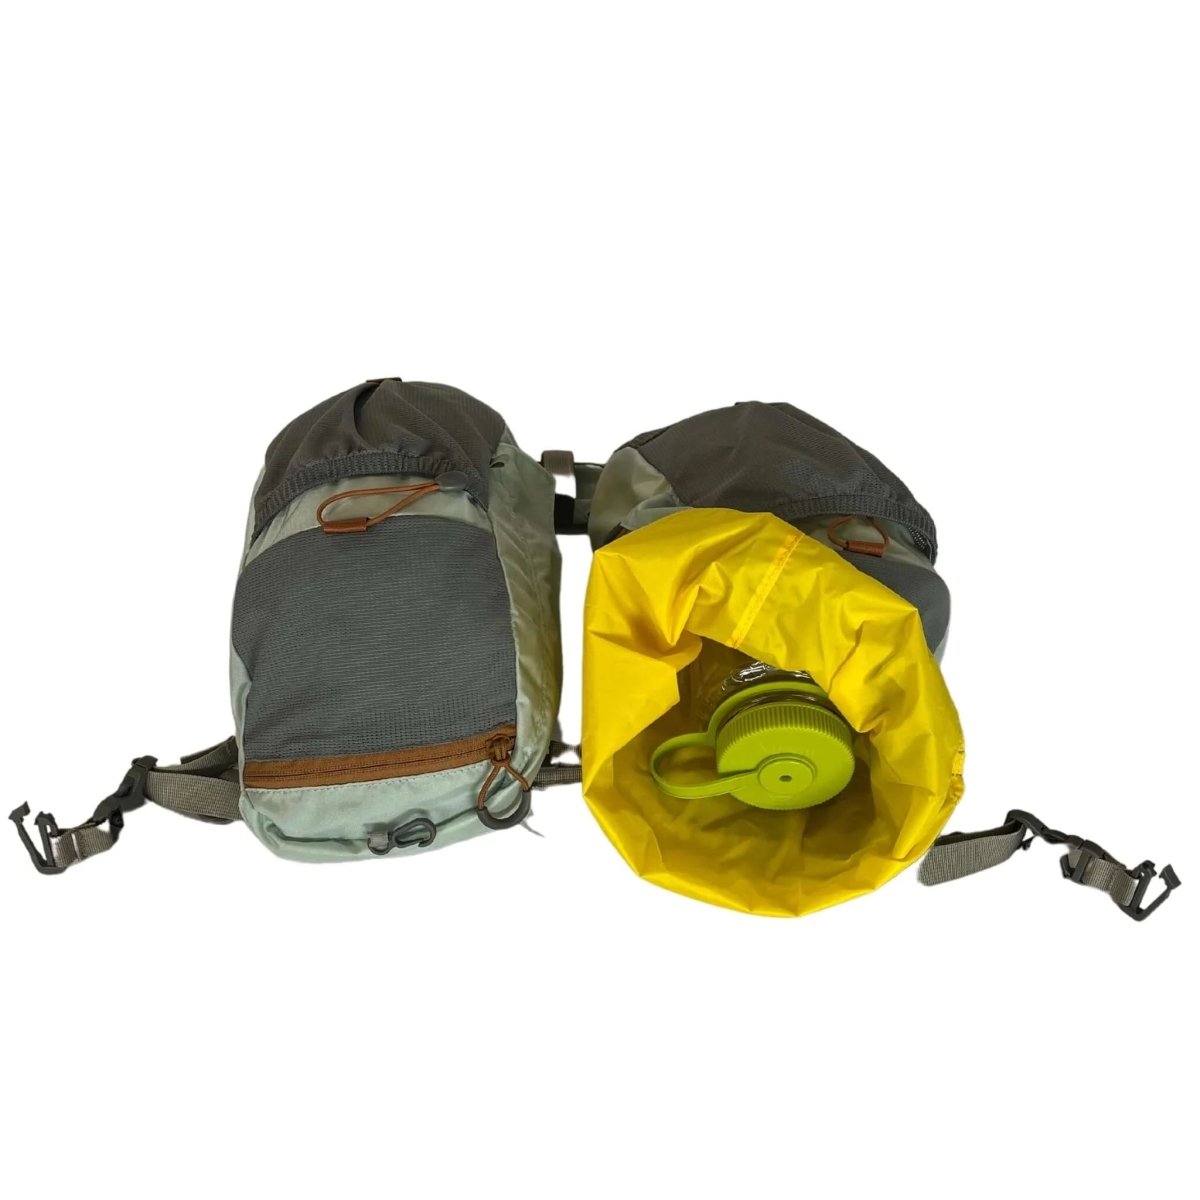 Universal Balance Bags - Fits Any Pack! - Lightweight Gear – Light Hiking  Gear